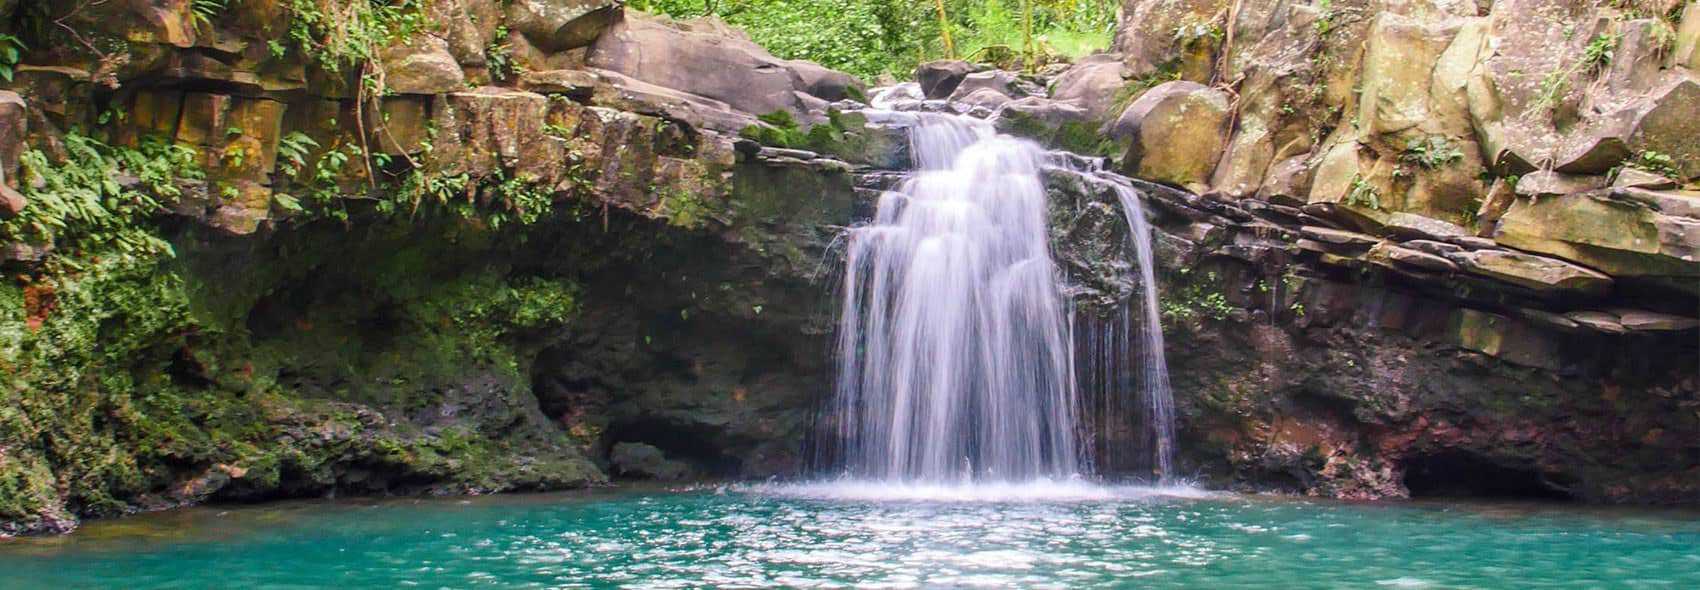 Maui Hawaii wellness travel waterfall